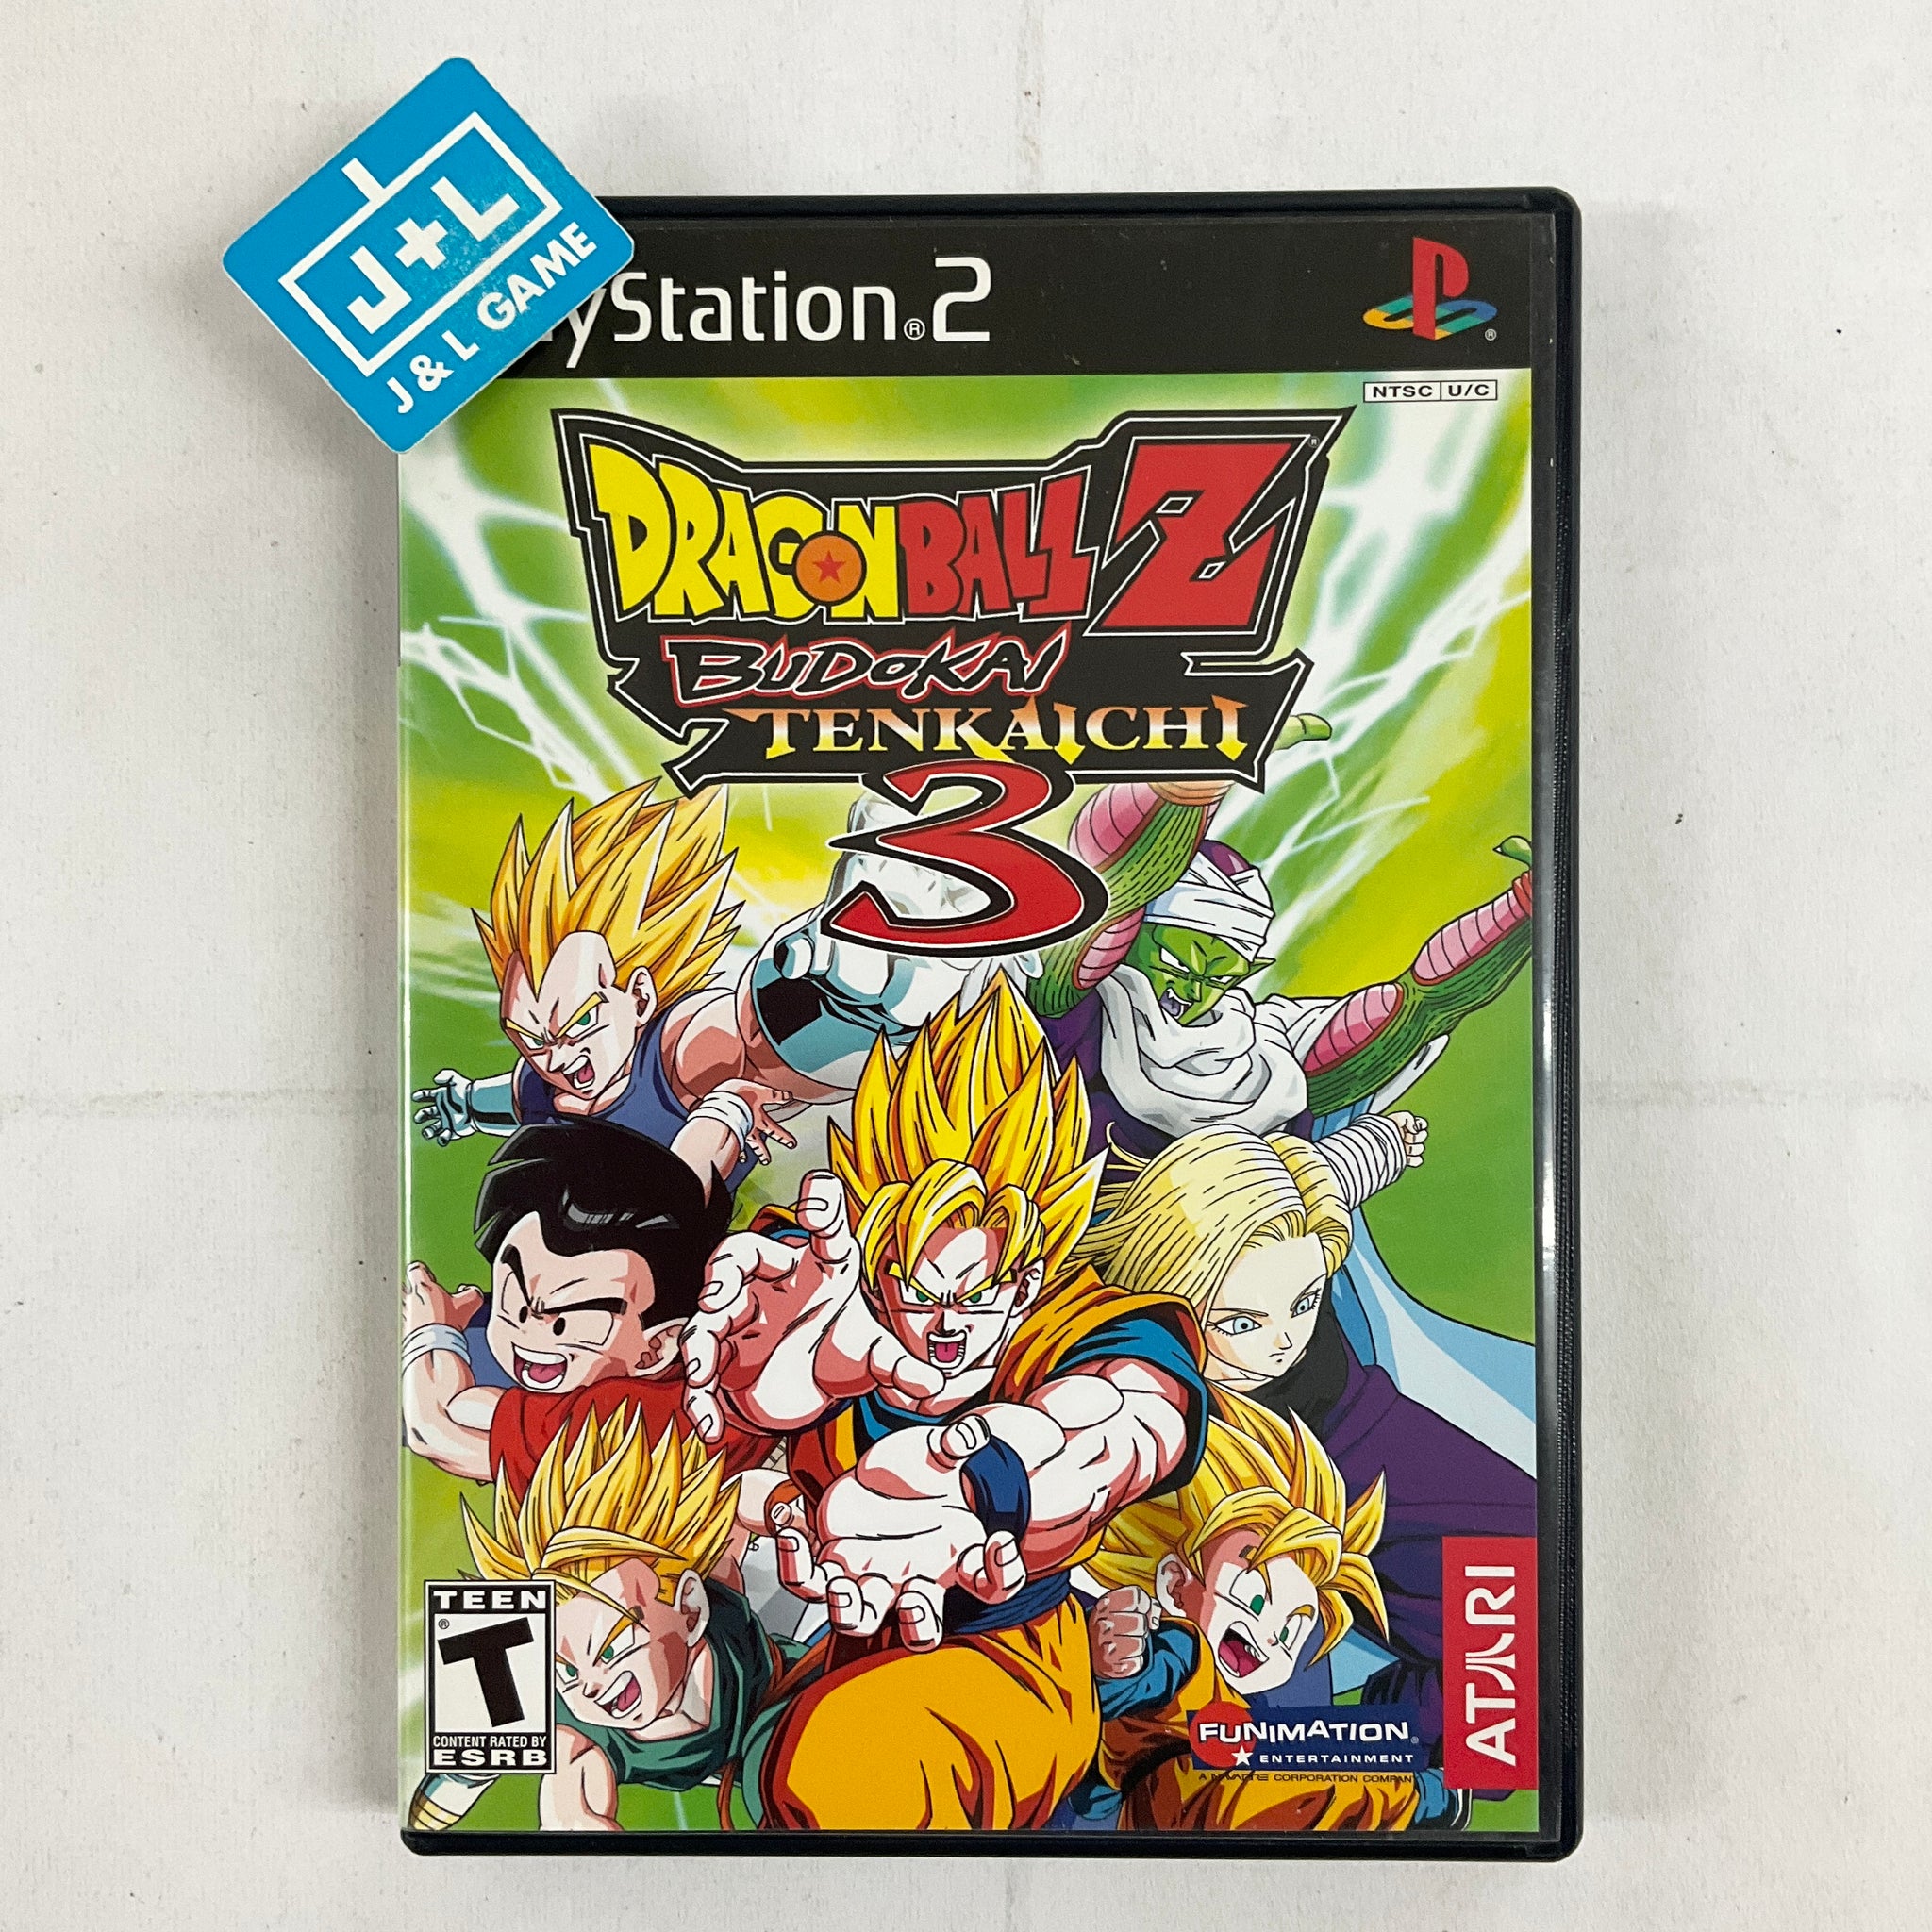 Dragon Ball Z: Budokai Tenkaichi 3 (PlayStation 2, Wii) - The